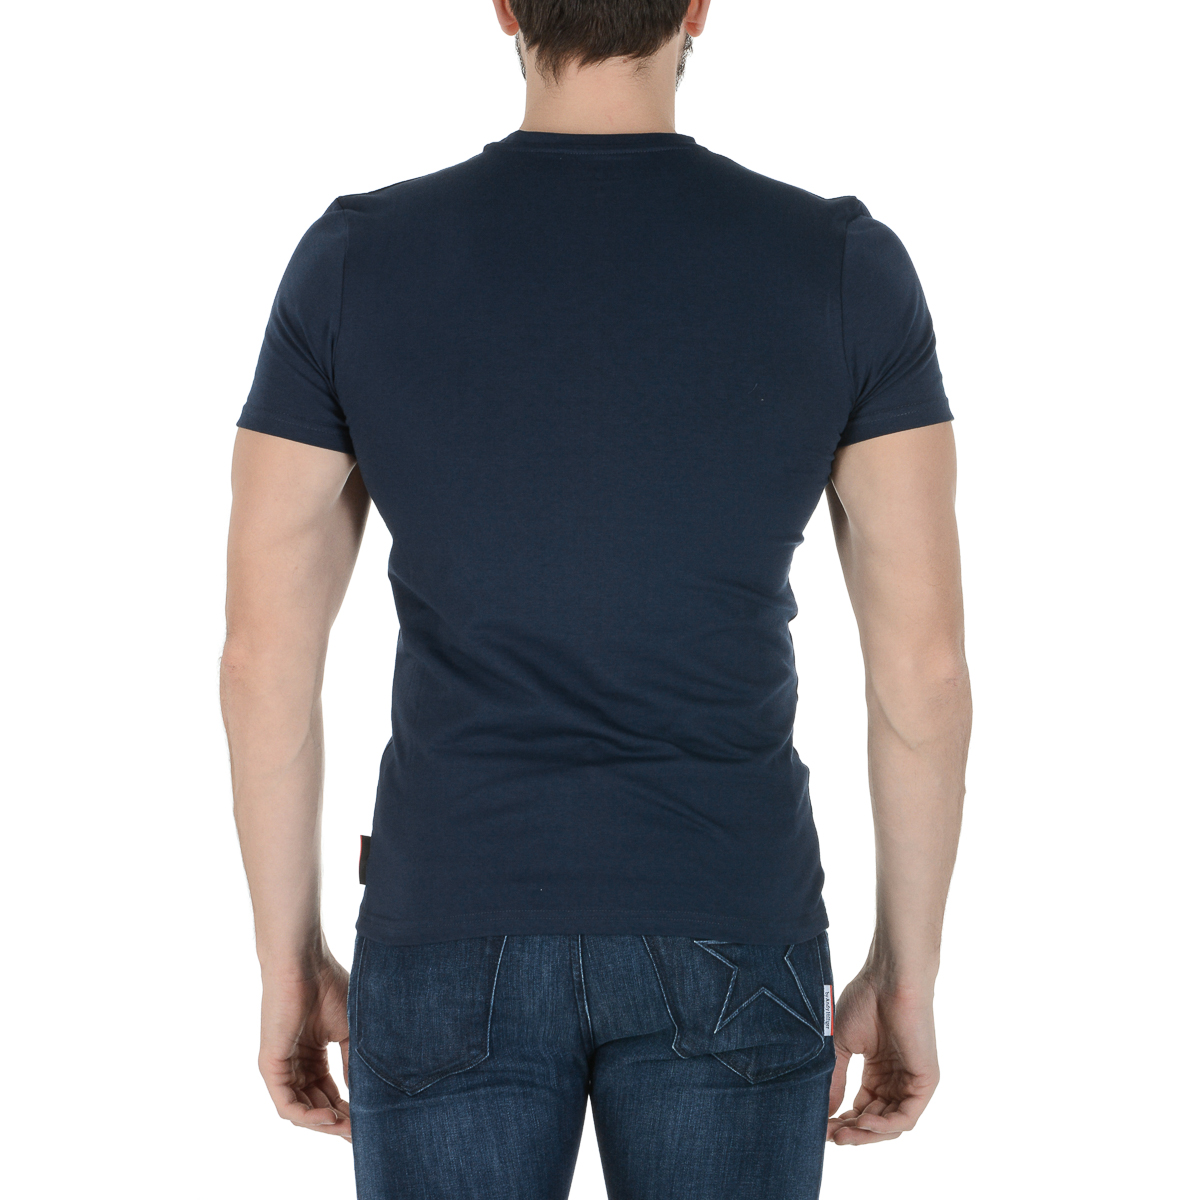 Andrew Charles Mens T-Shirt Short Sleeves Round Neck Blue KEITA